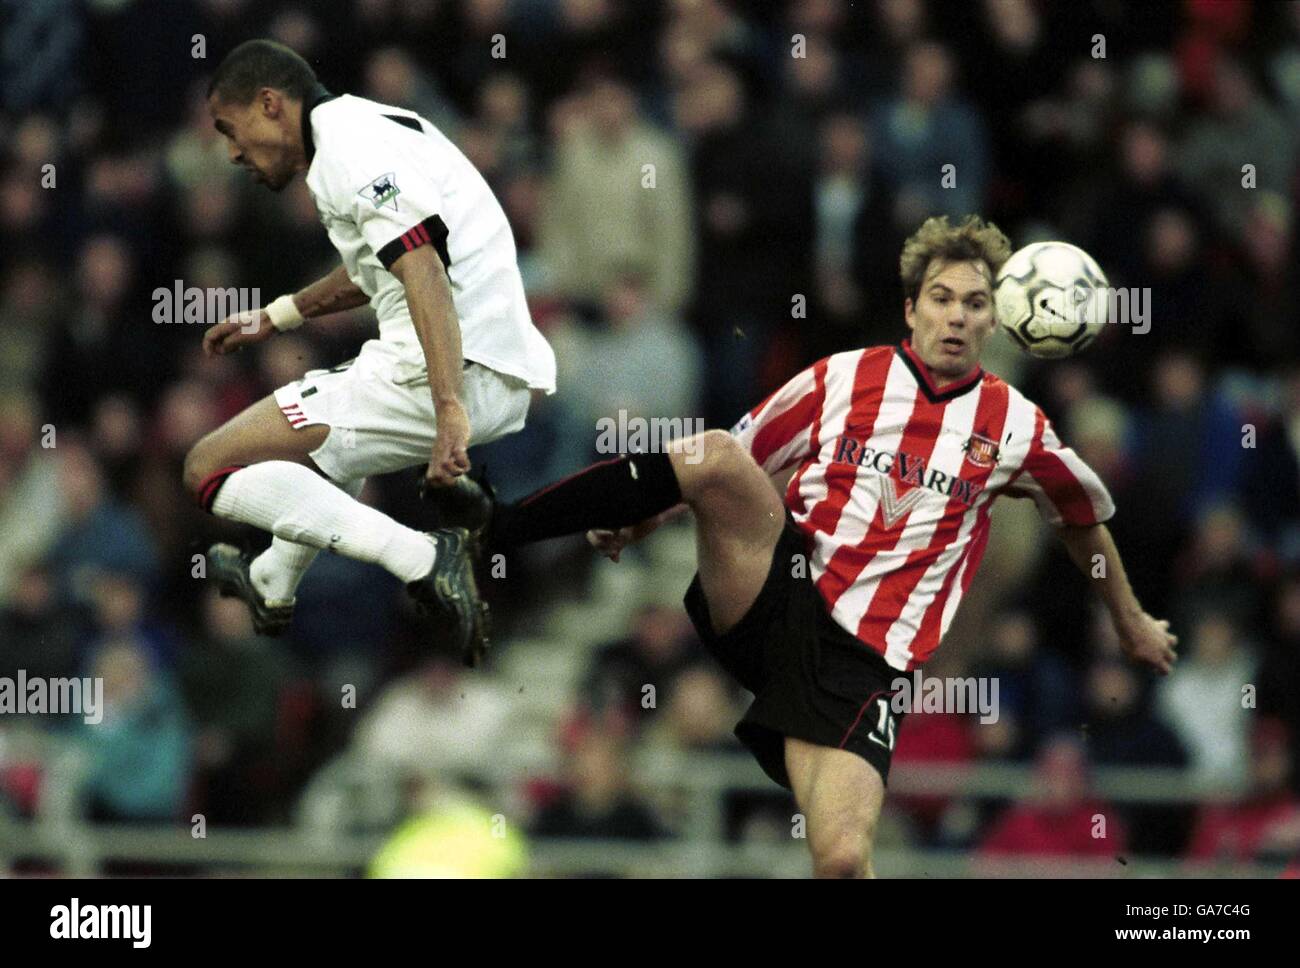 Fulham's Steve Marlet battles for the ball in the air with Sunderland's Jason McAteer Stock Photo